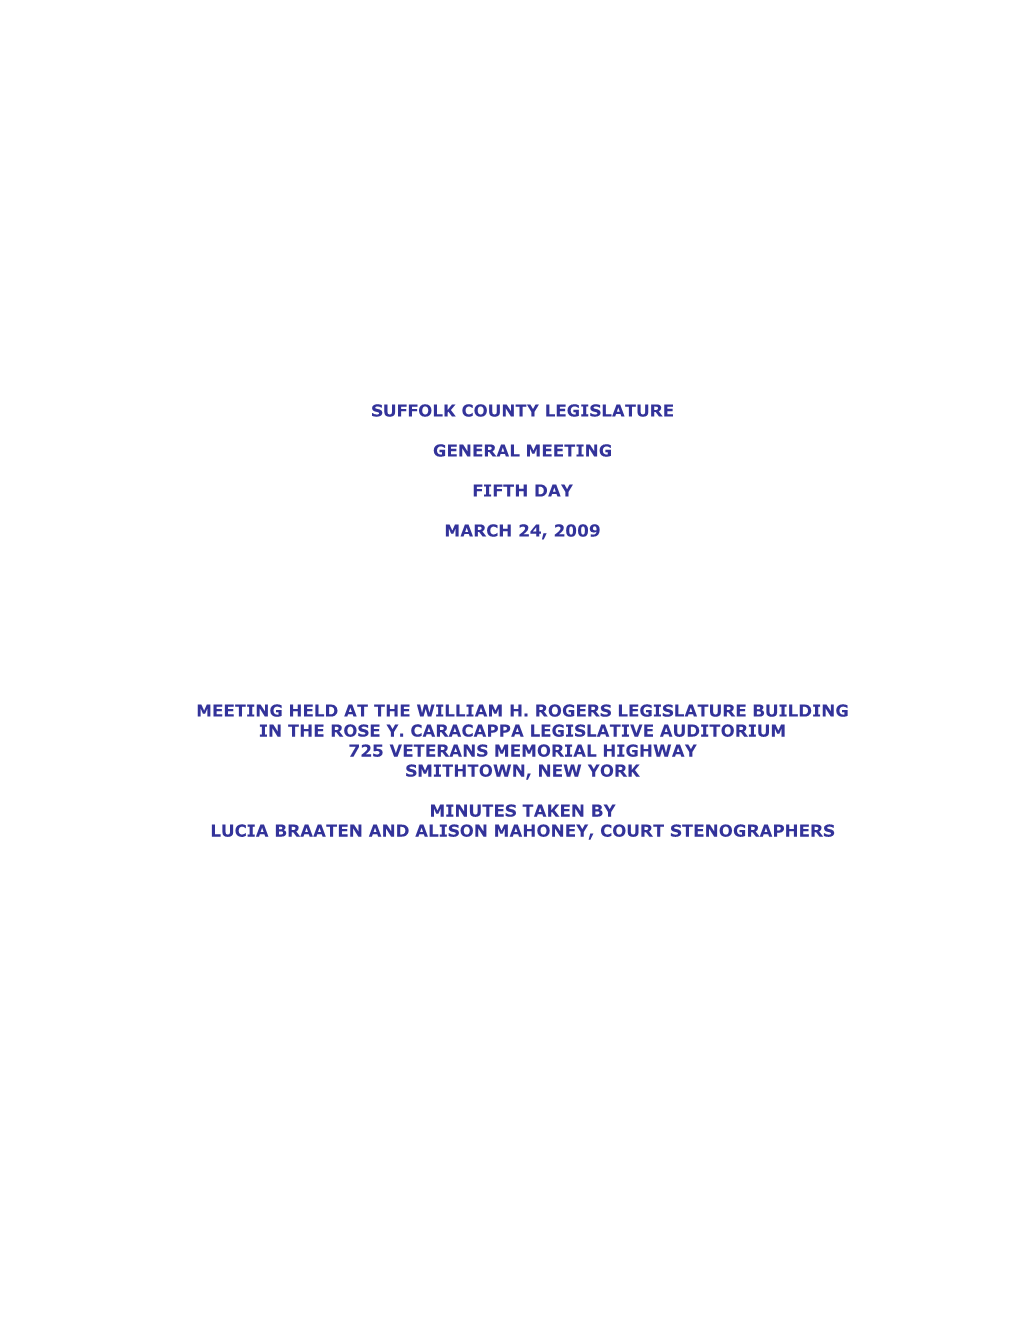 03/24/2009 General Meeting Minutes (PDF)